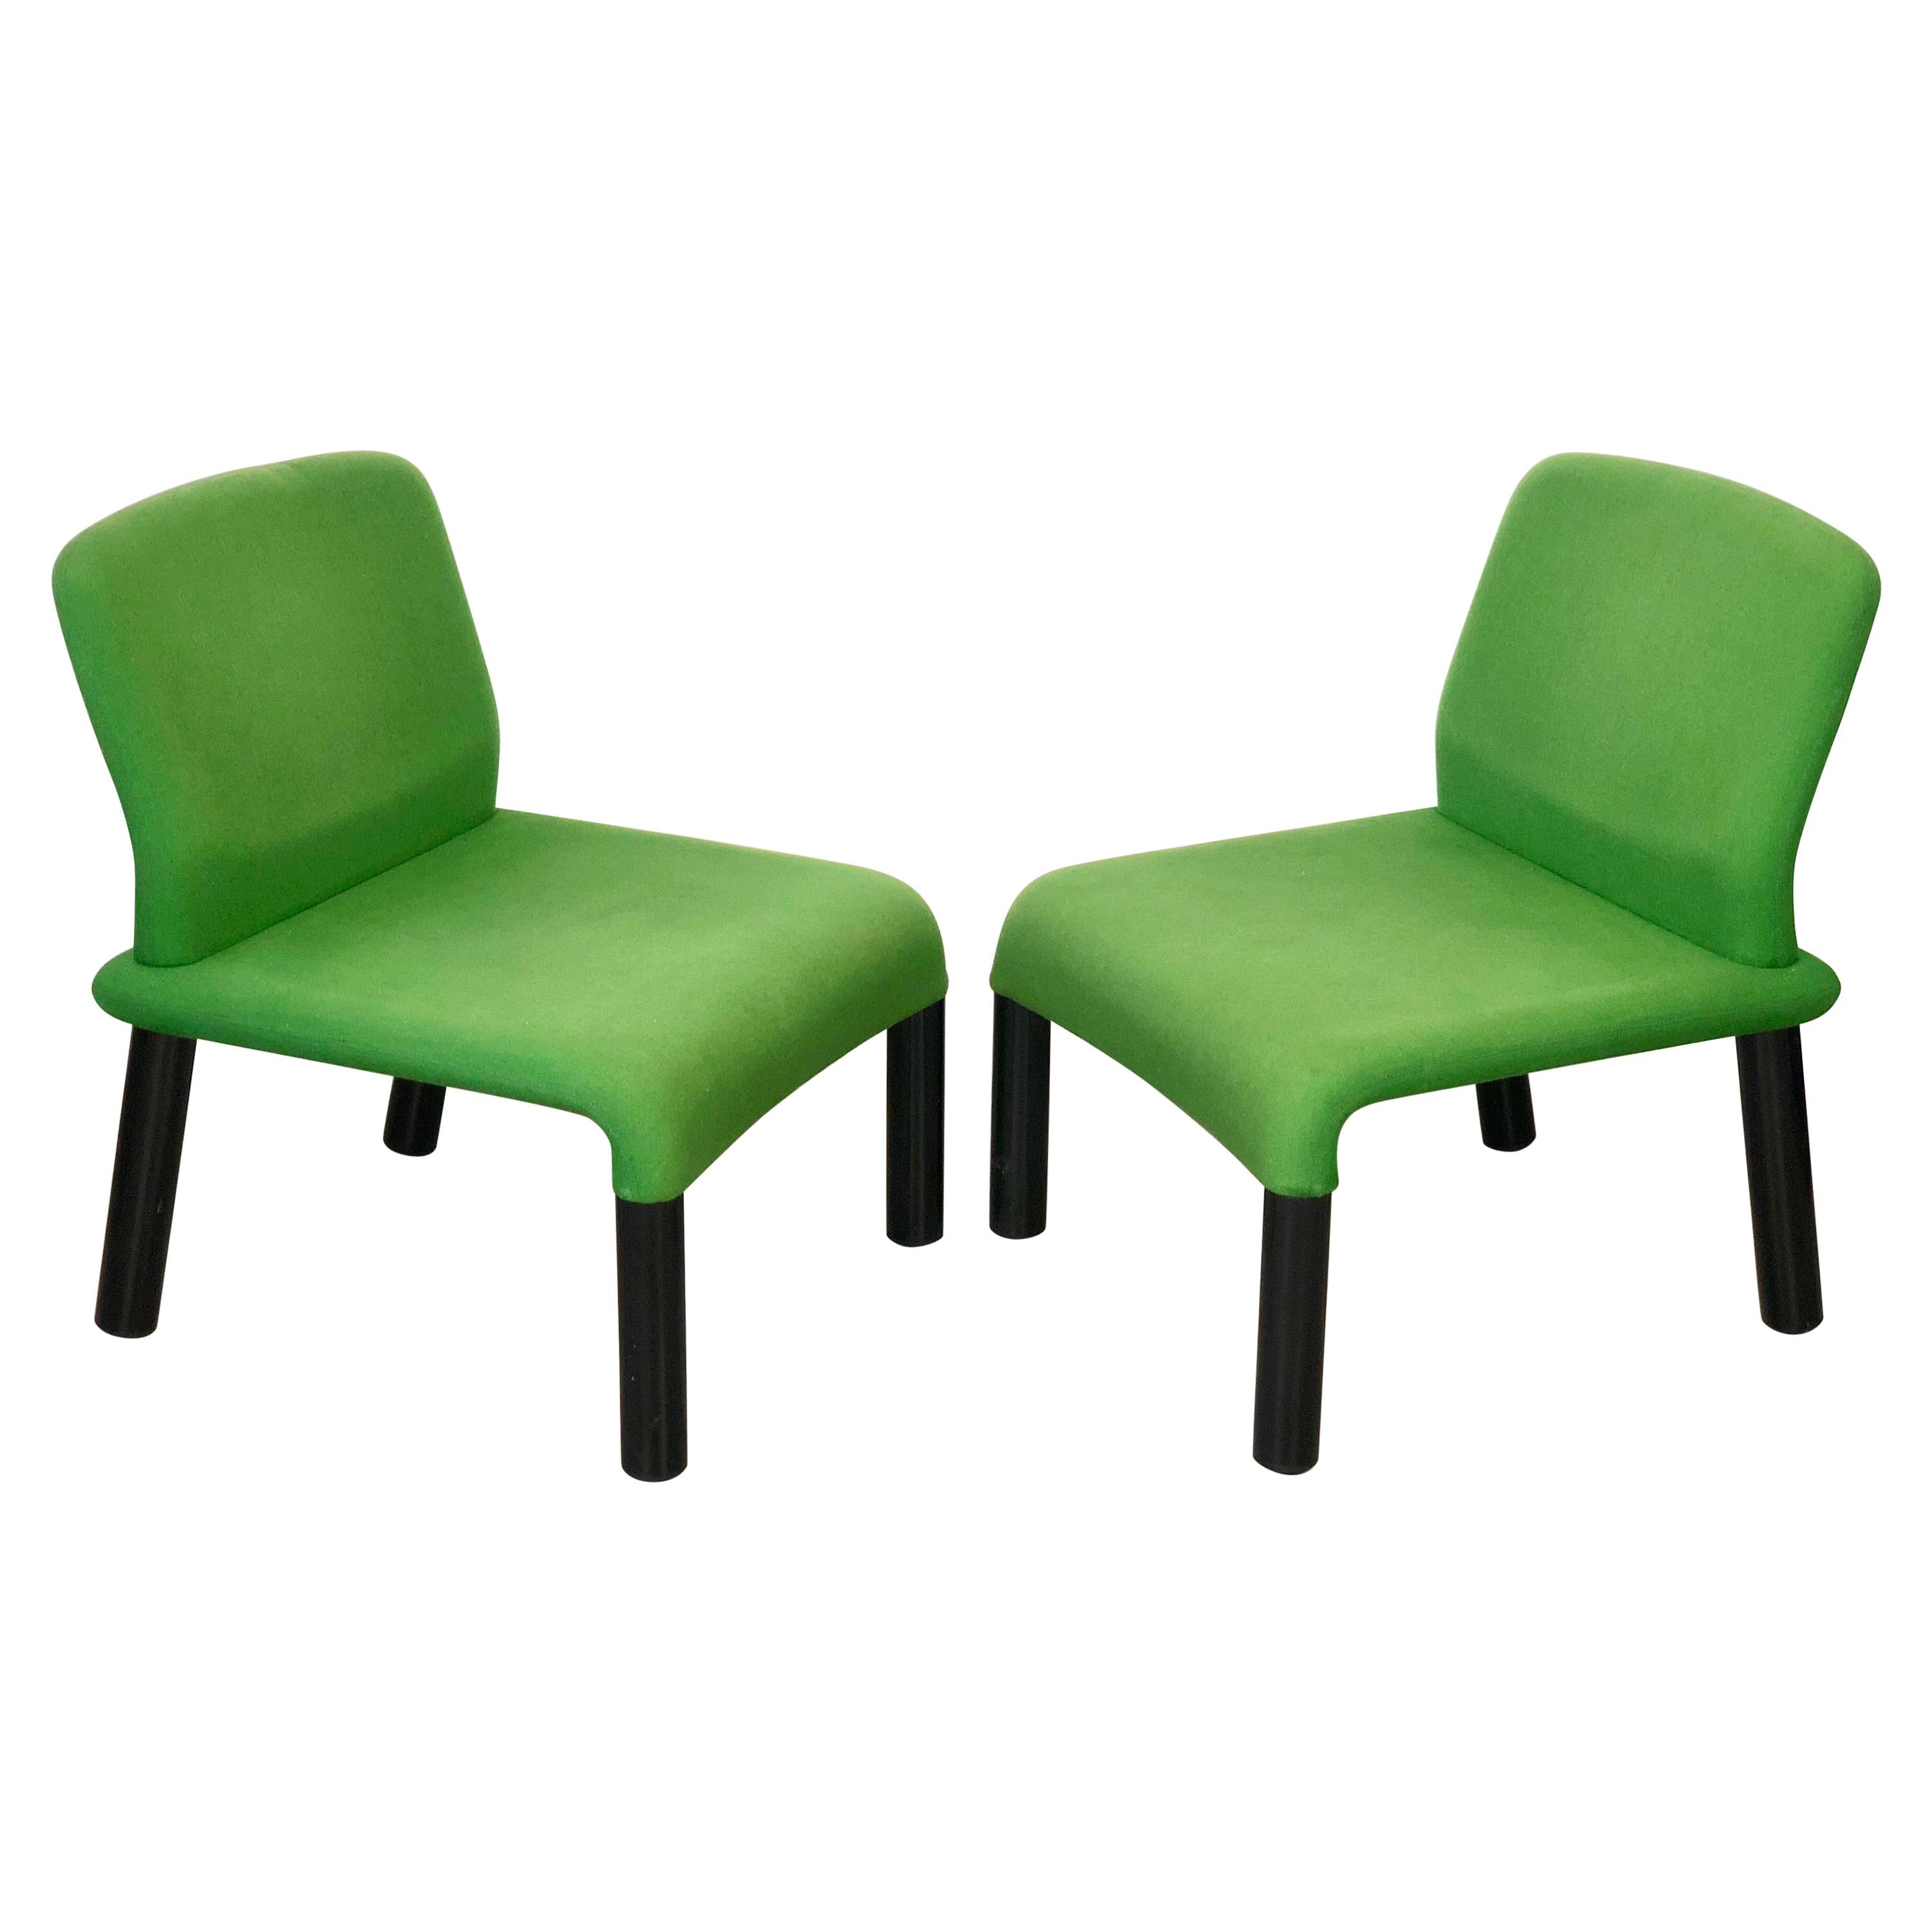 Grüner Sessel aus Kunststoffstoff, Italien, 1970er Jahre, Paar